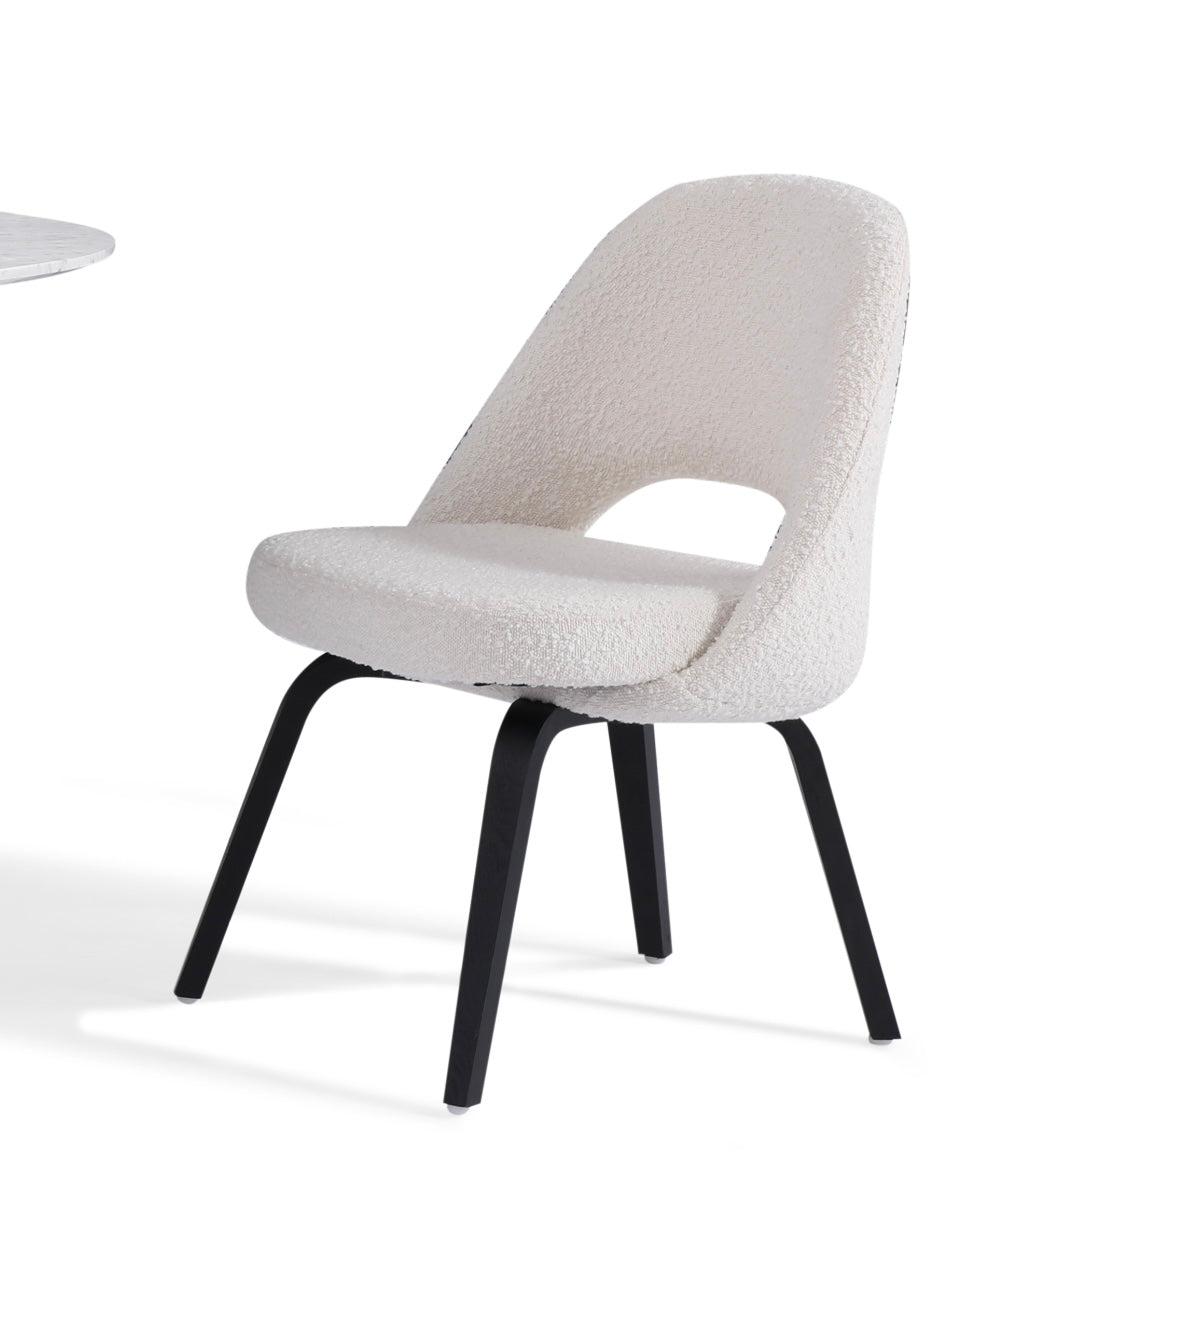 Aero Executive dining chair sets